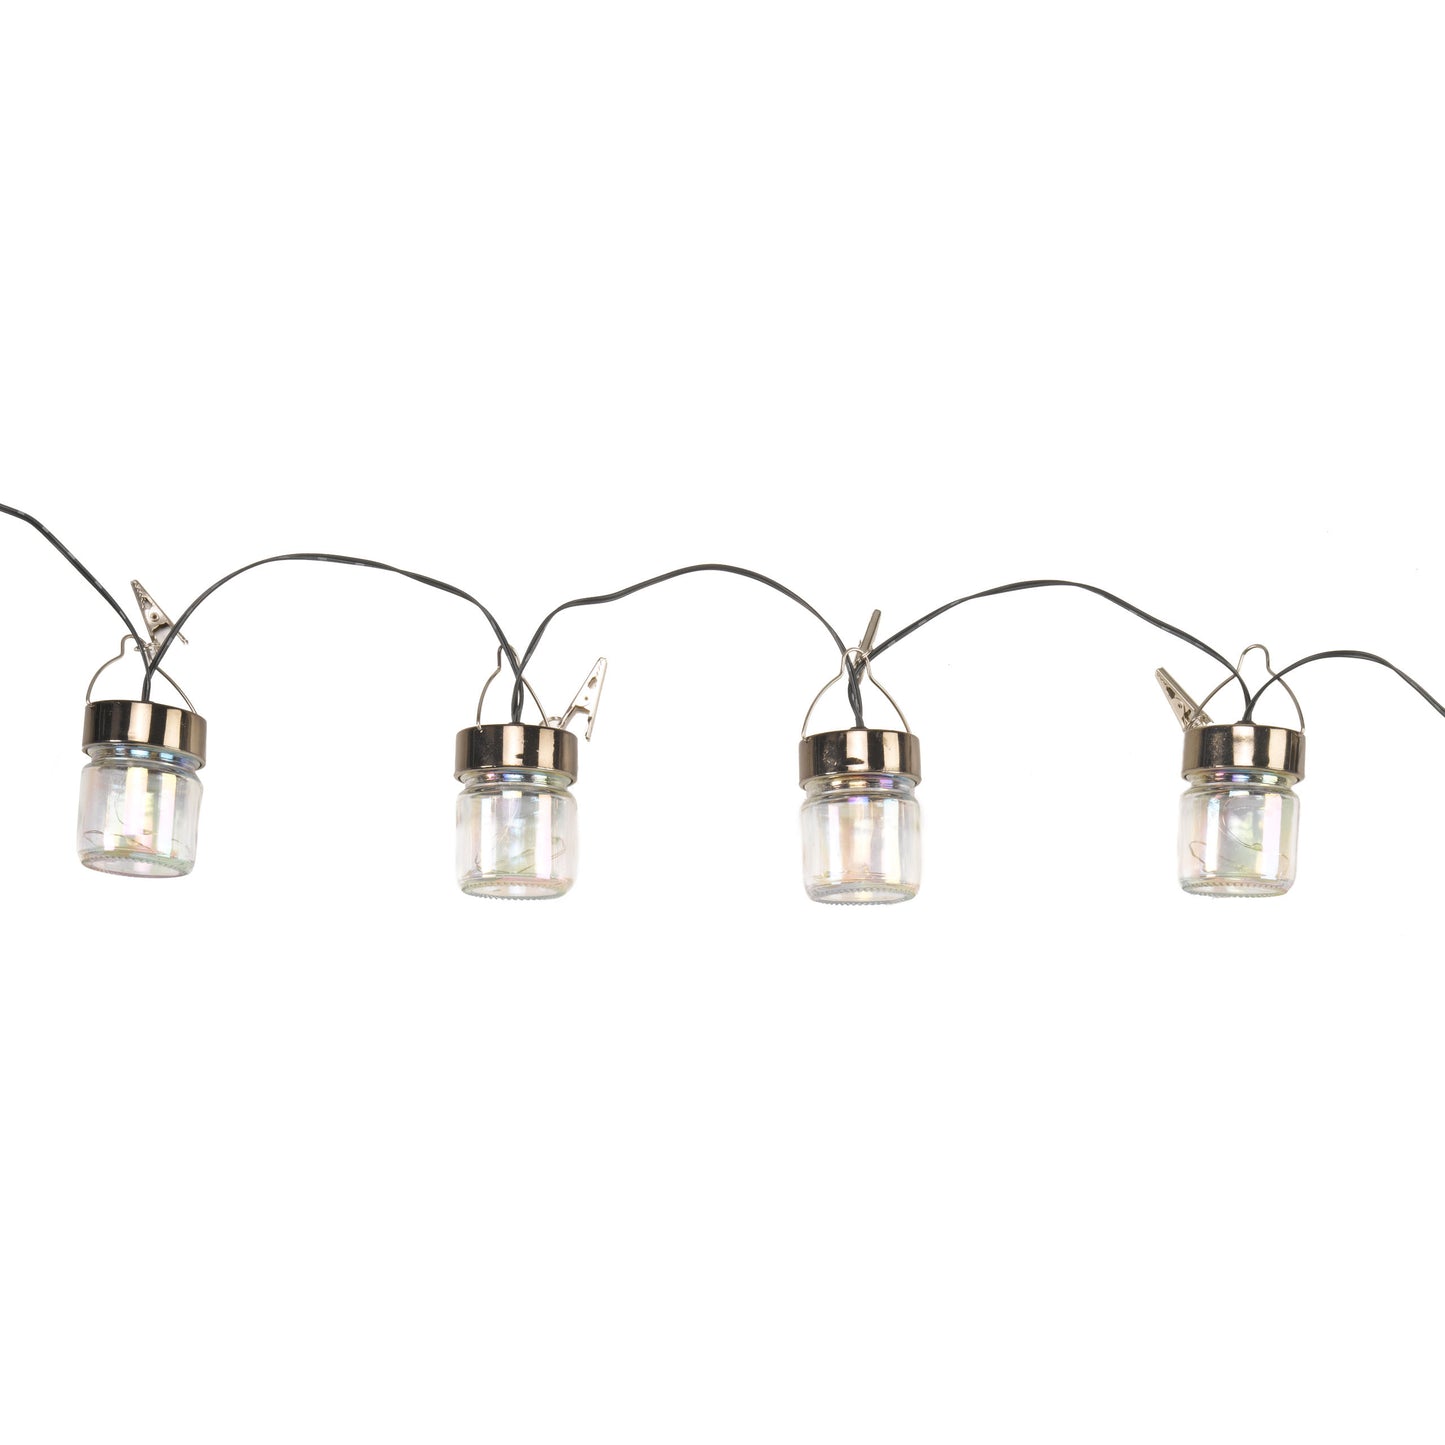 10 Firefly Opal Jars ⸱ solárna svetelná reťaz